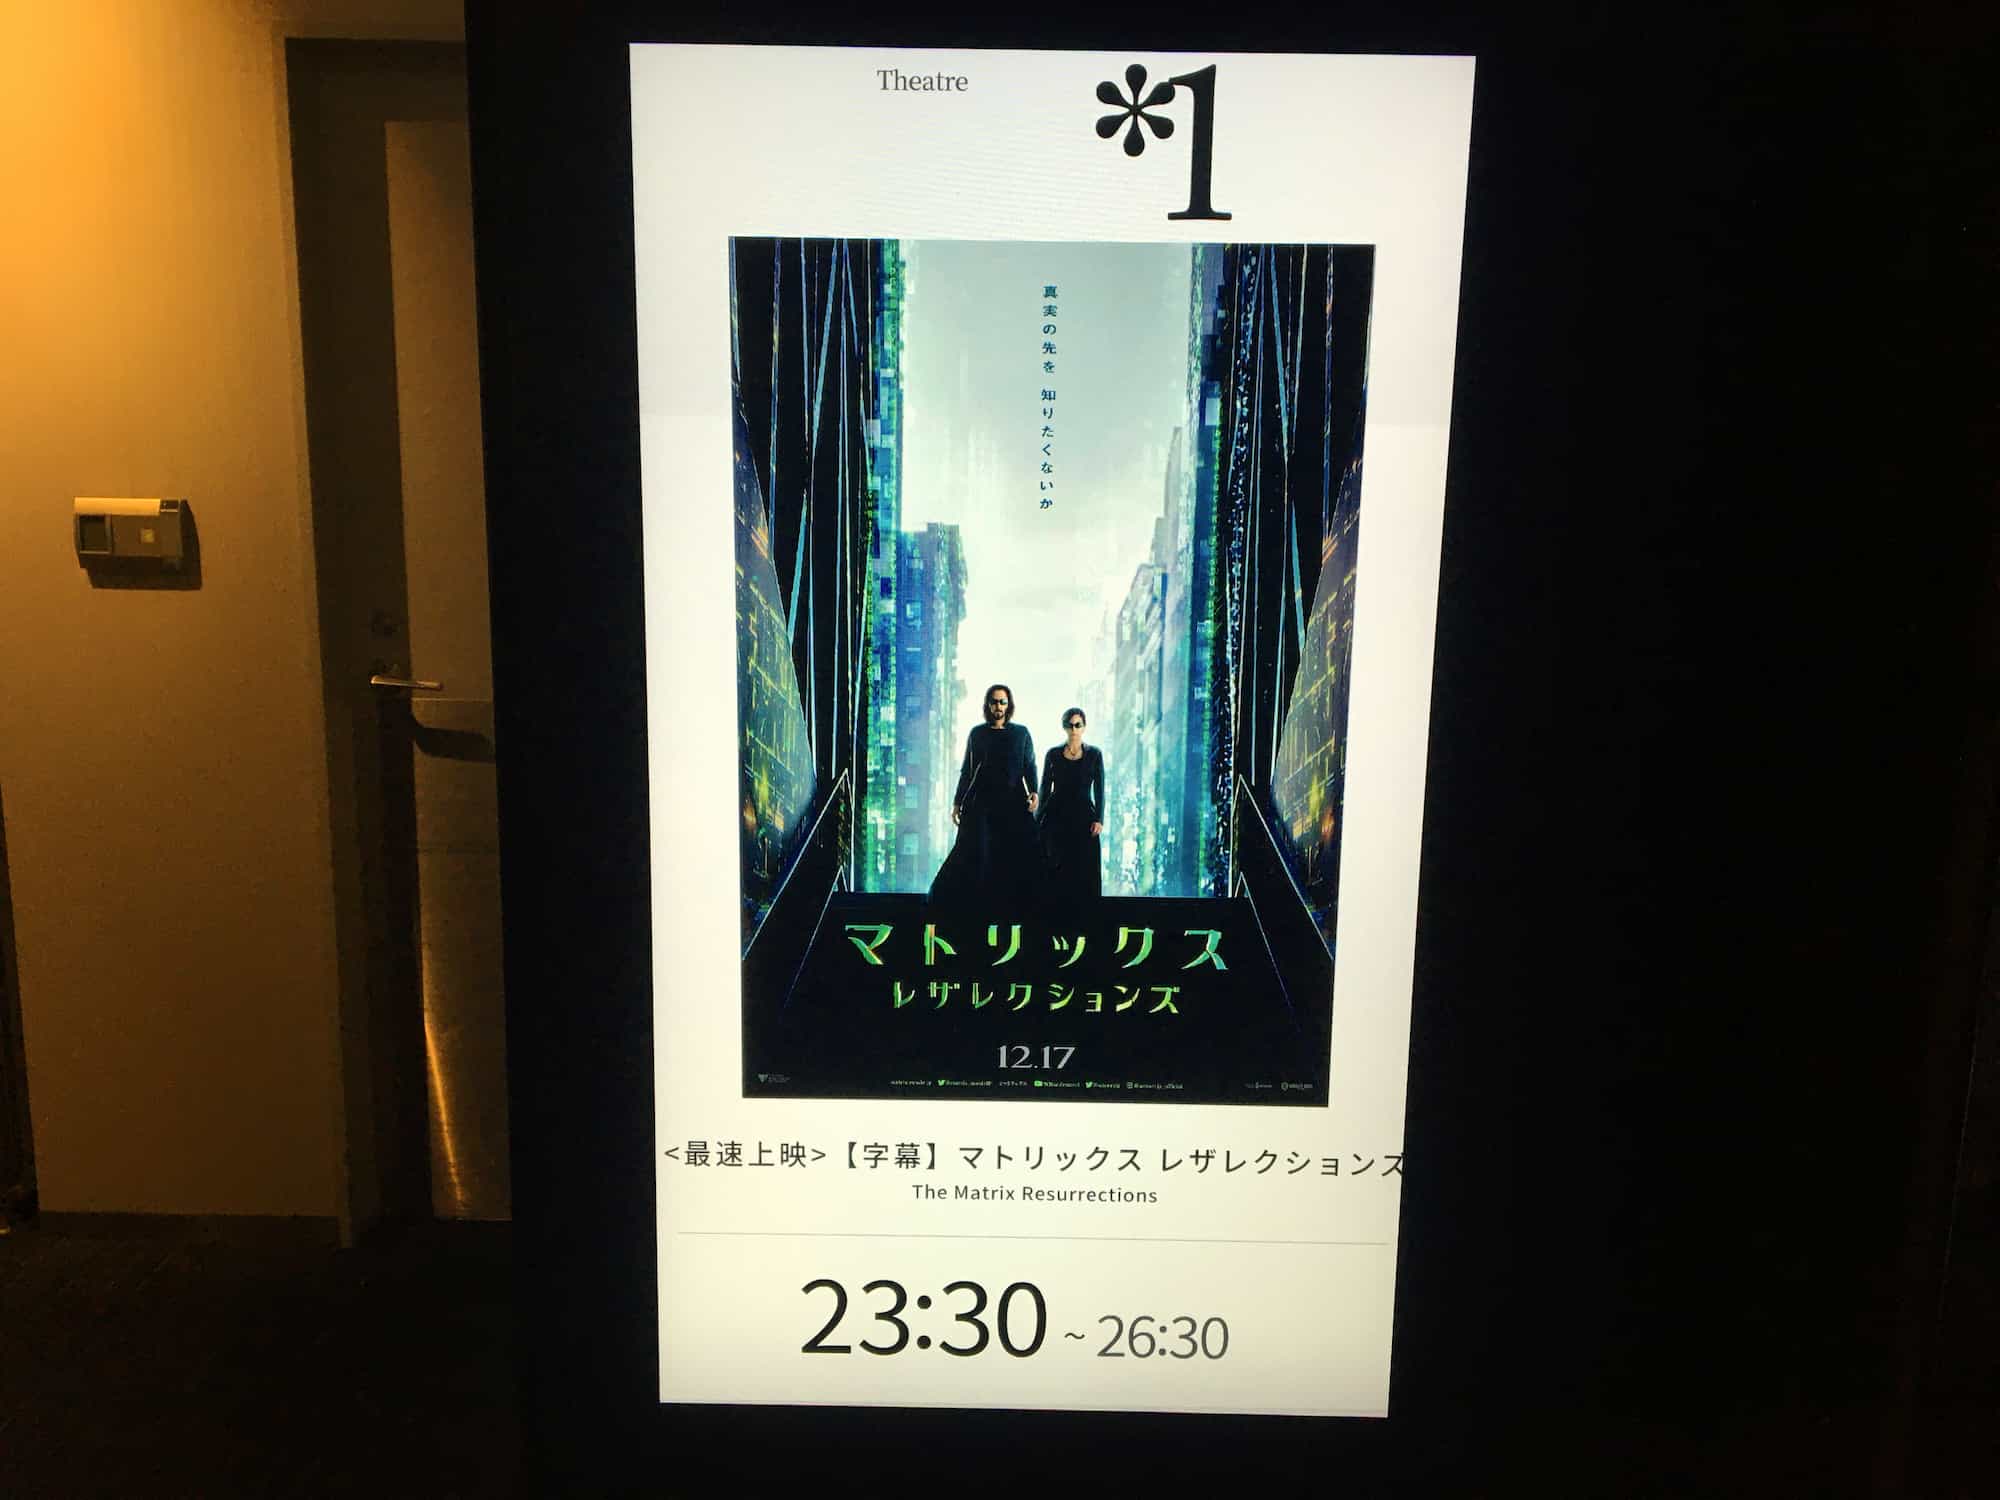 The exterior of the 'The Matrix Resurrections' cinema screen room at Shinjuku Piccadilly Cinema